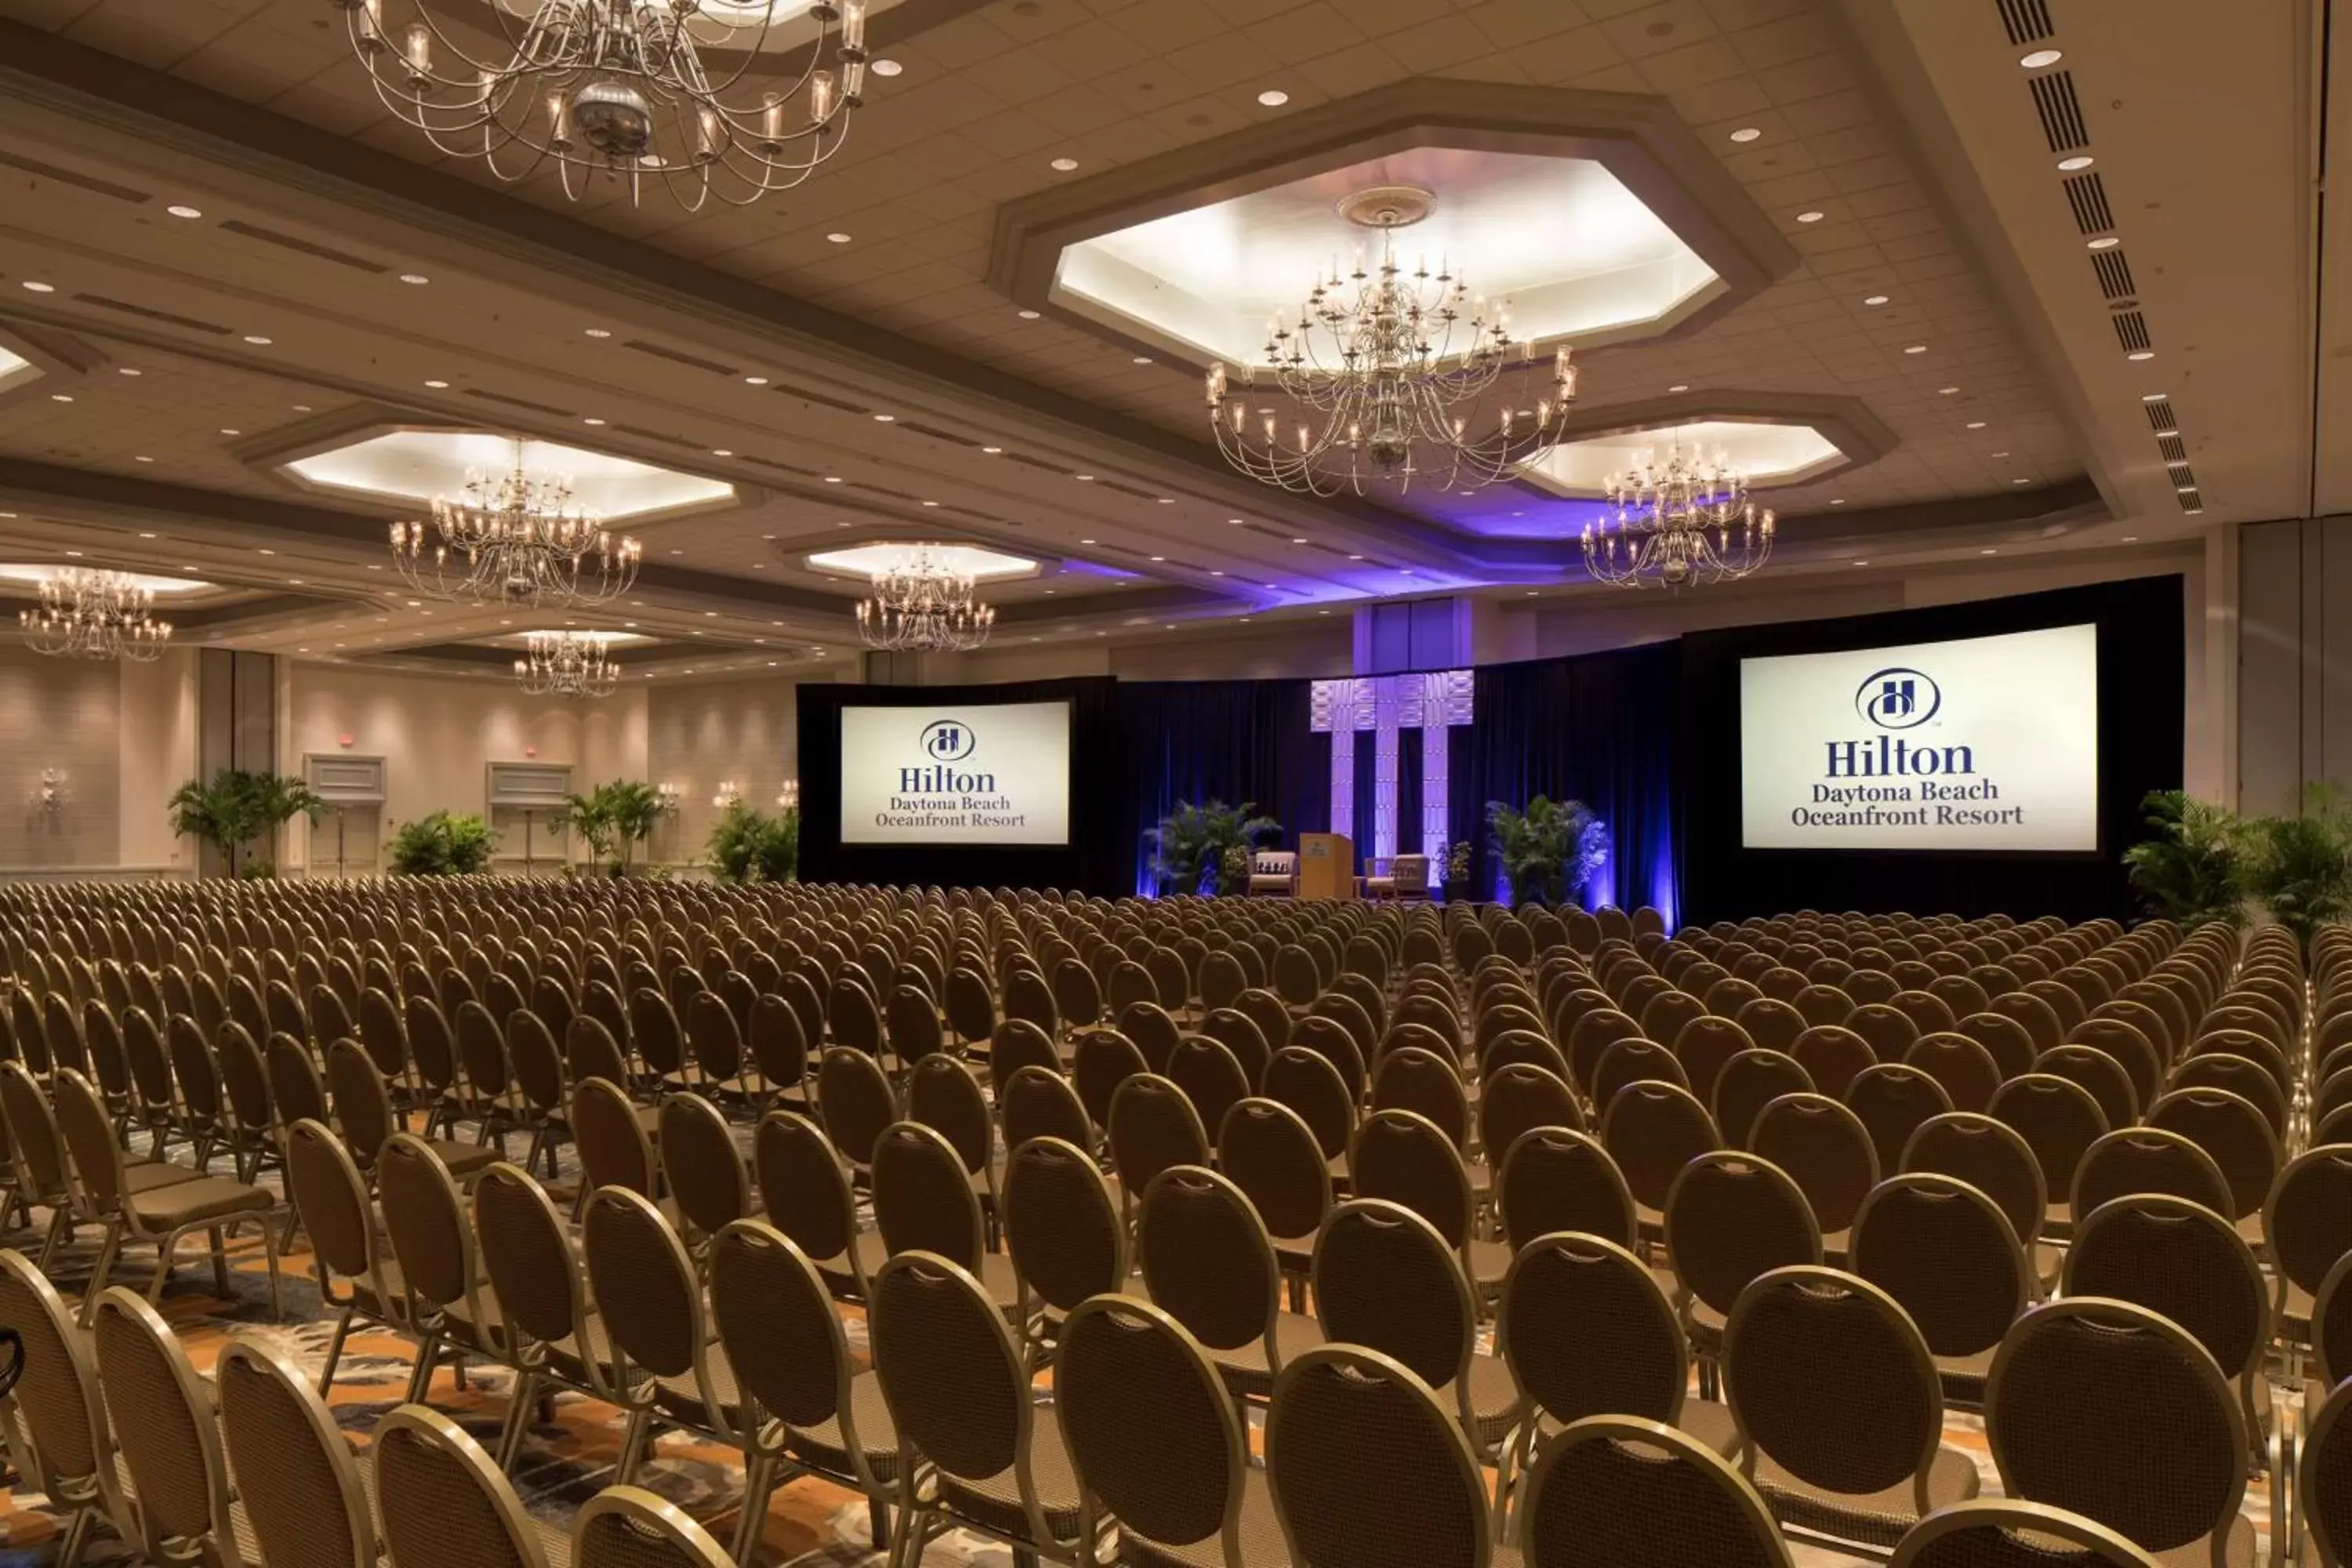 Meeting/conference room in Hilton Daytona Beach Resort